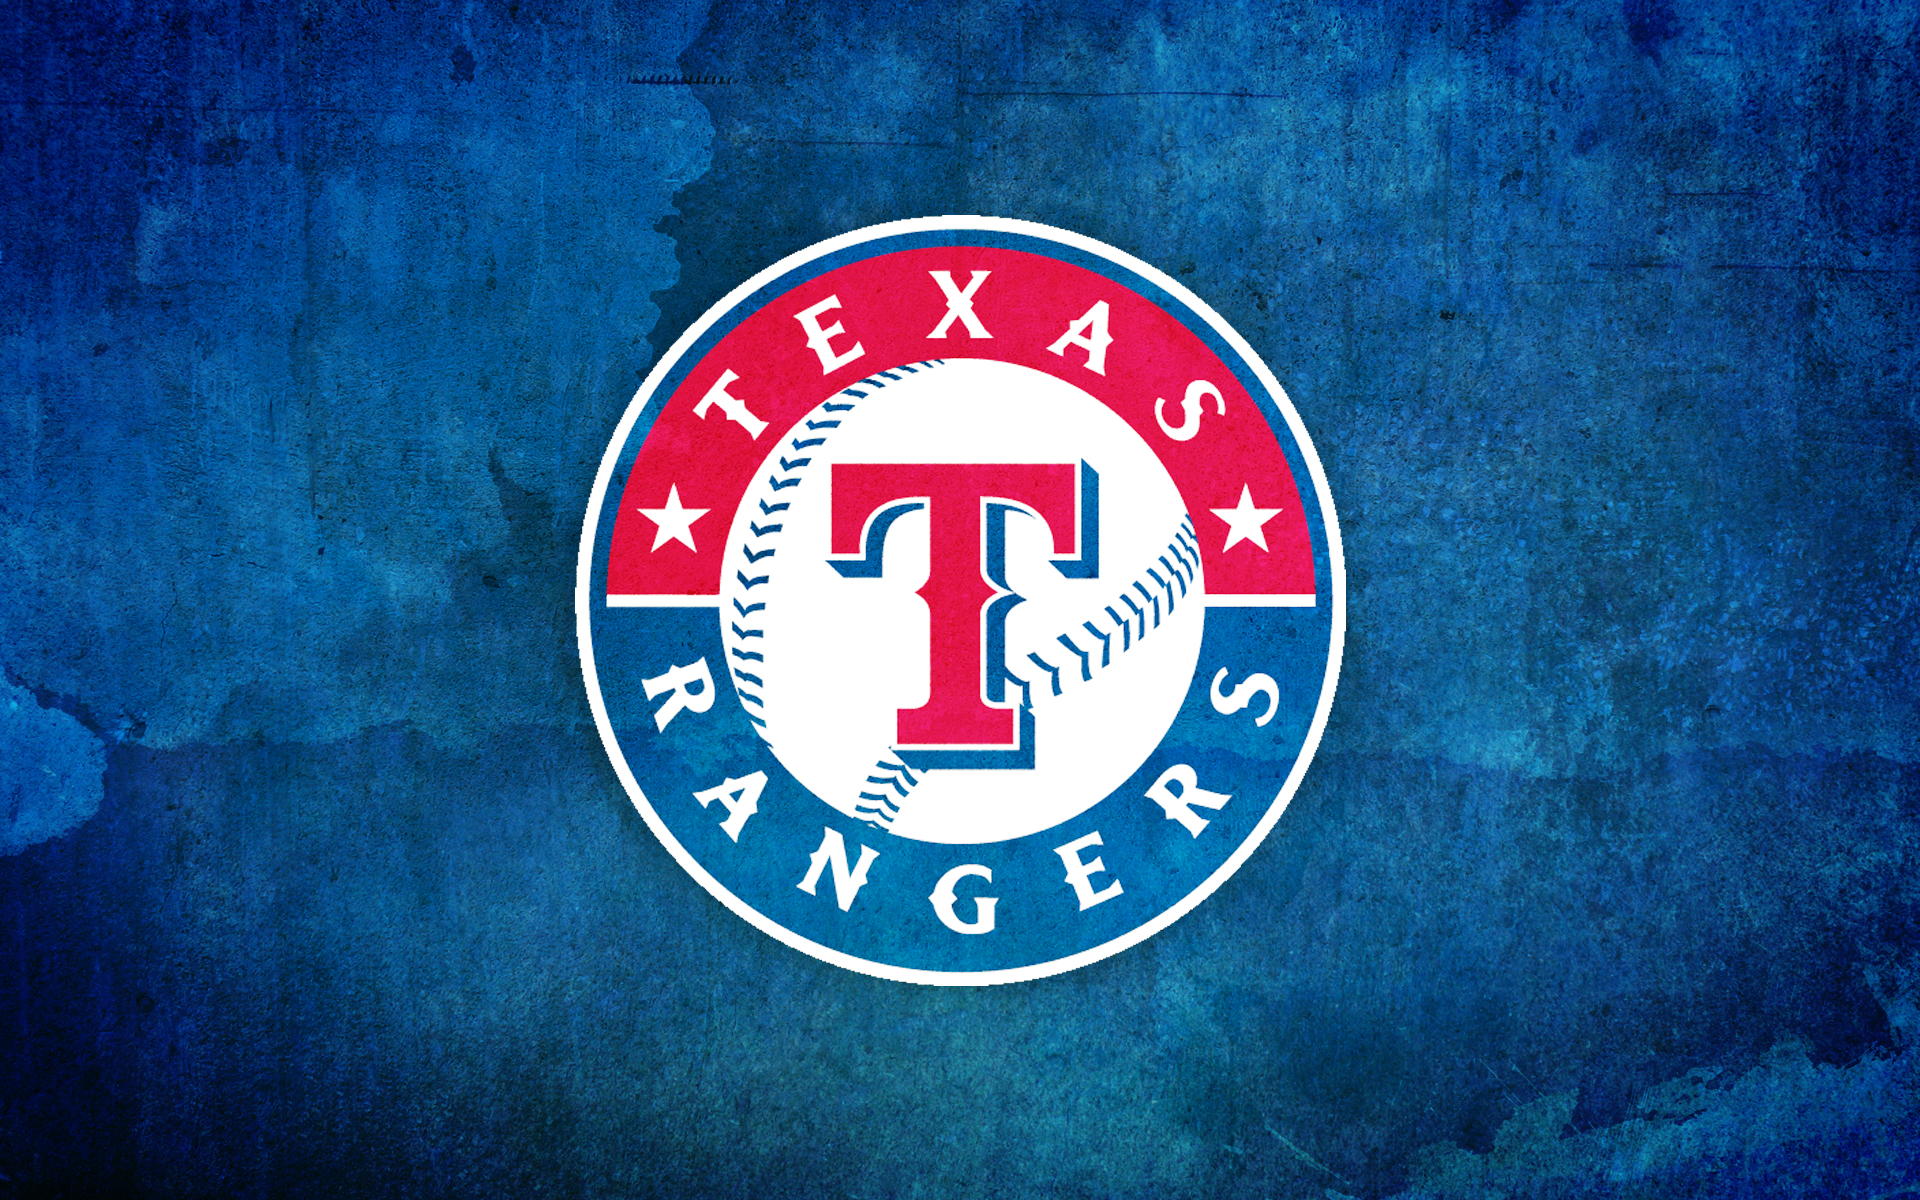 Texas Rangers 1920 x 1200 1024 x 640